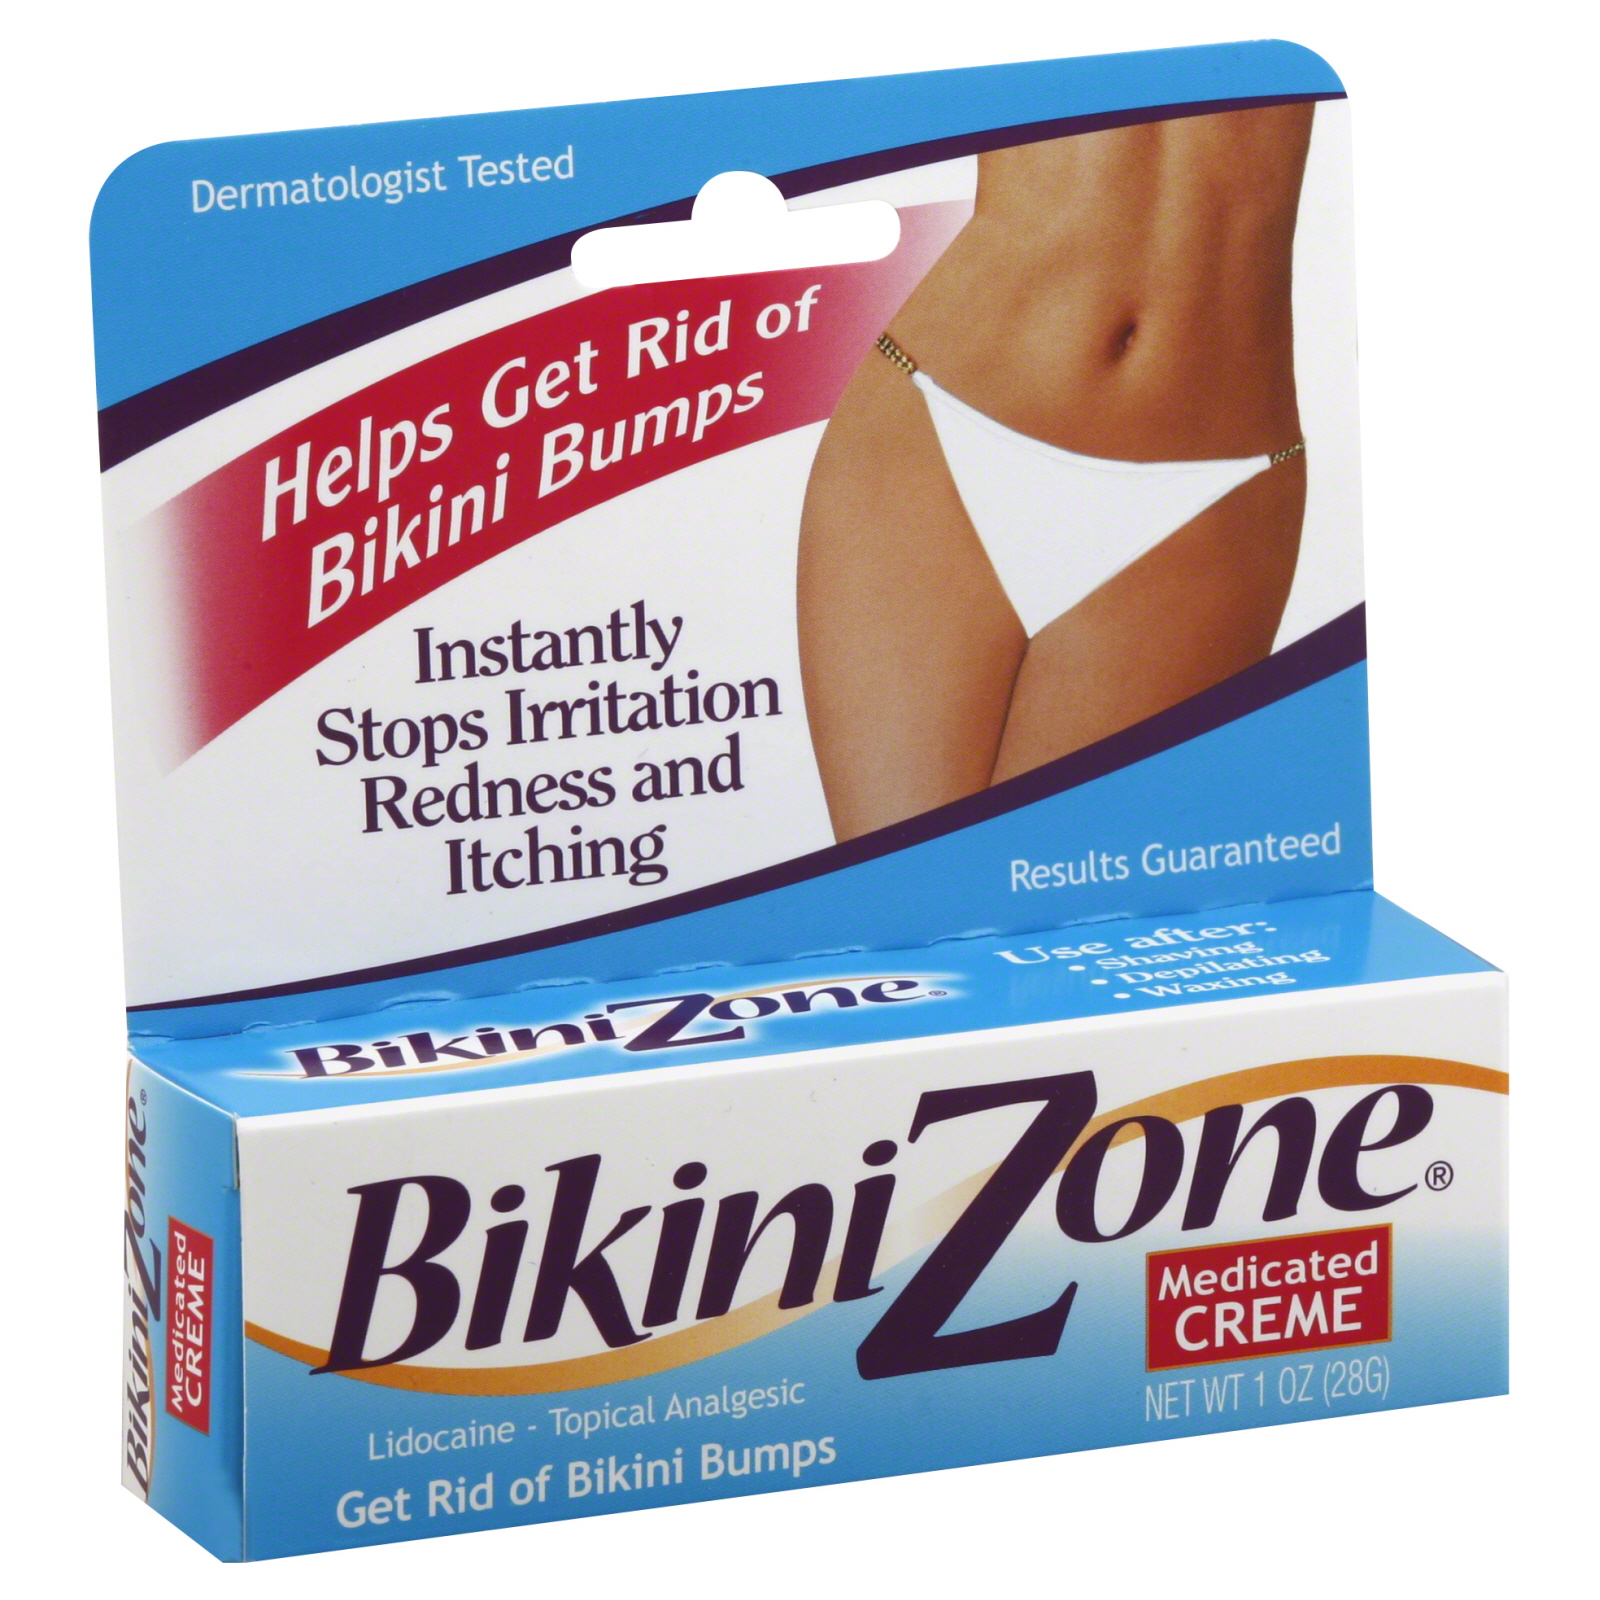 Bikini Zone Medicated Creme, 1 oz (28 g)